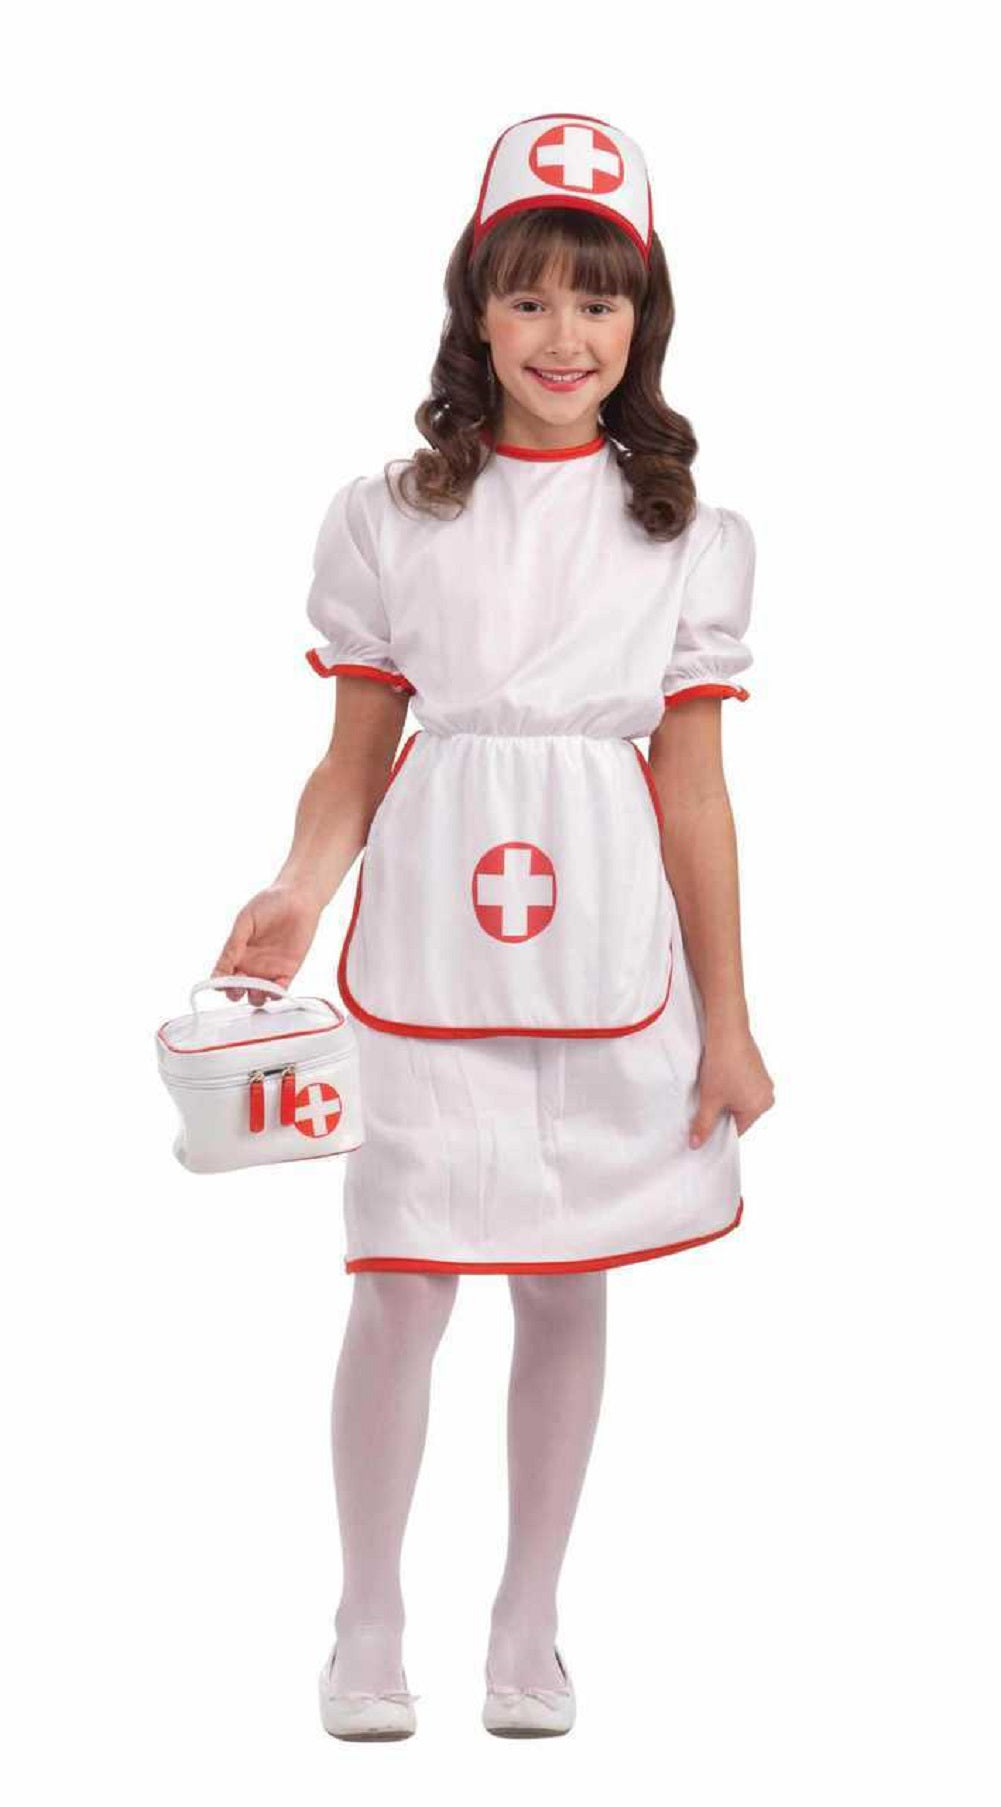 Nurse - Economy - White/Red - Costume - Child - Small 4-6